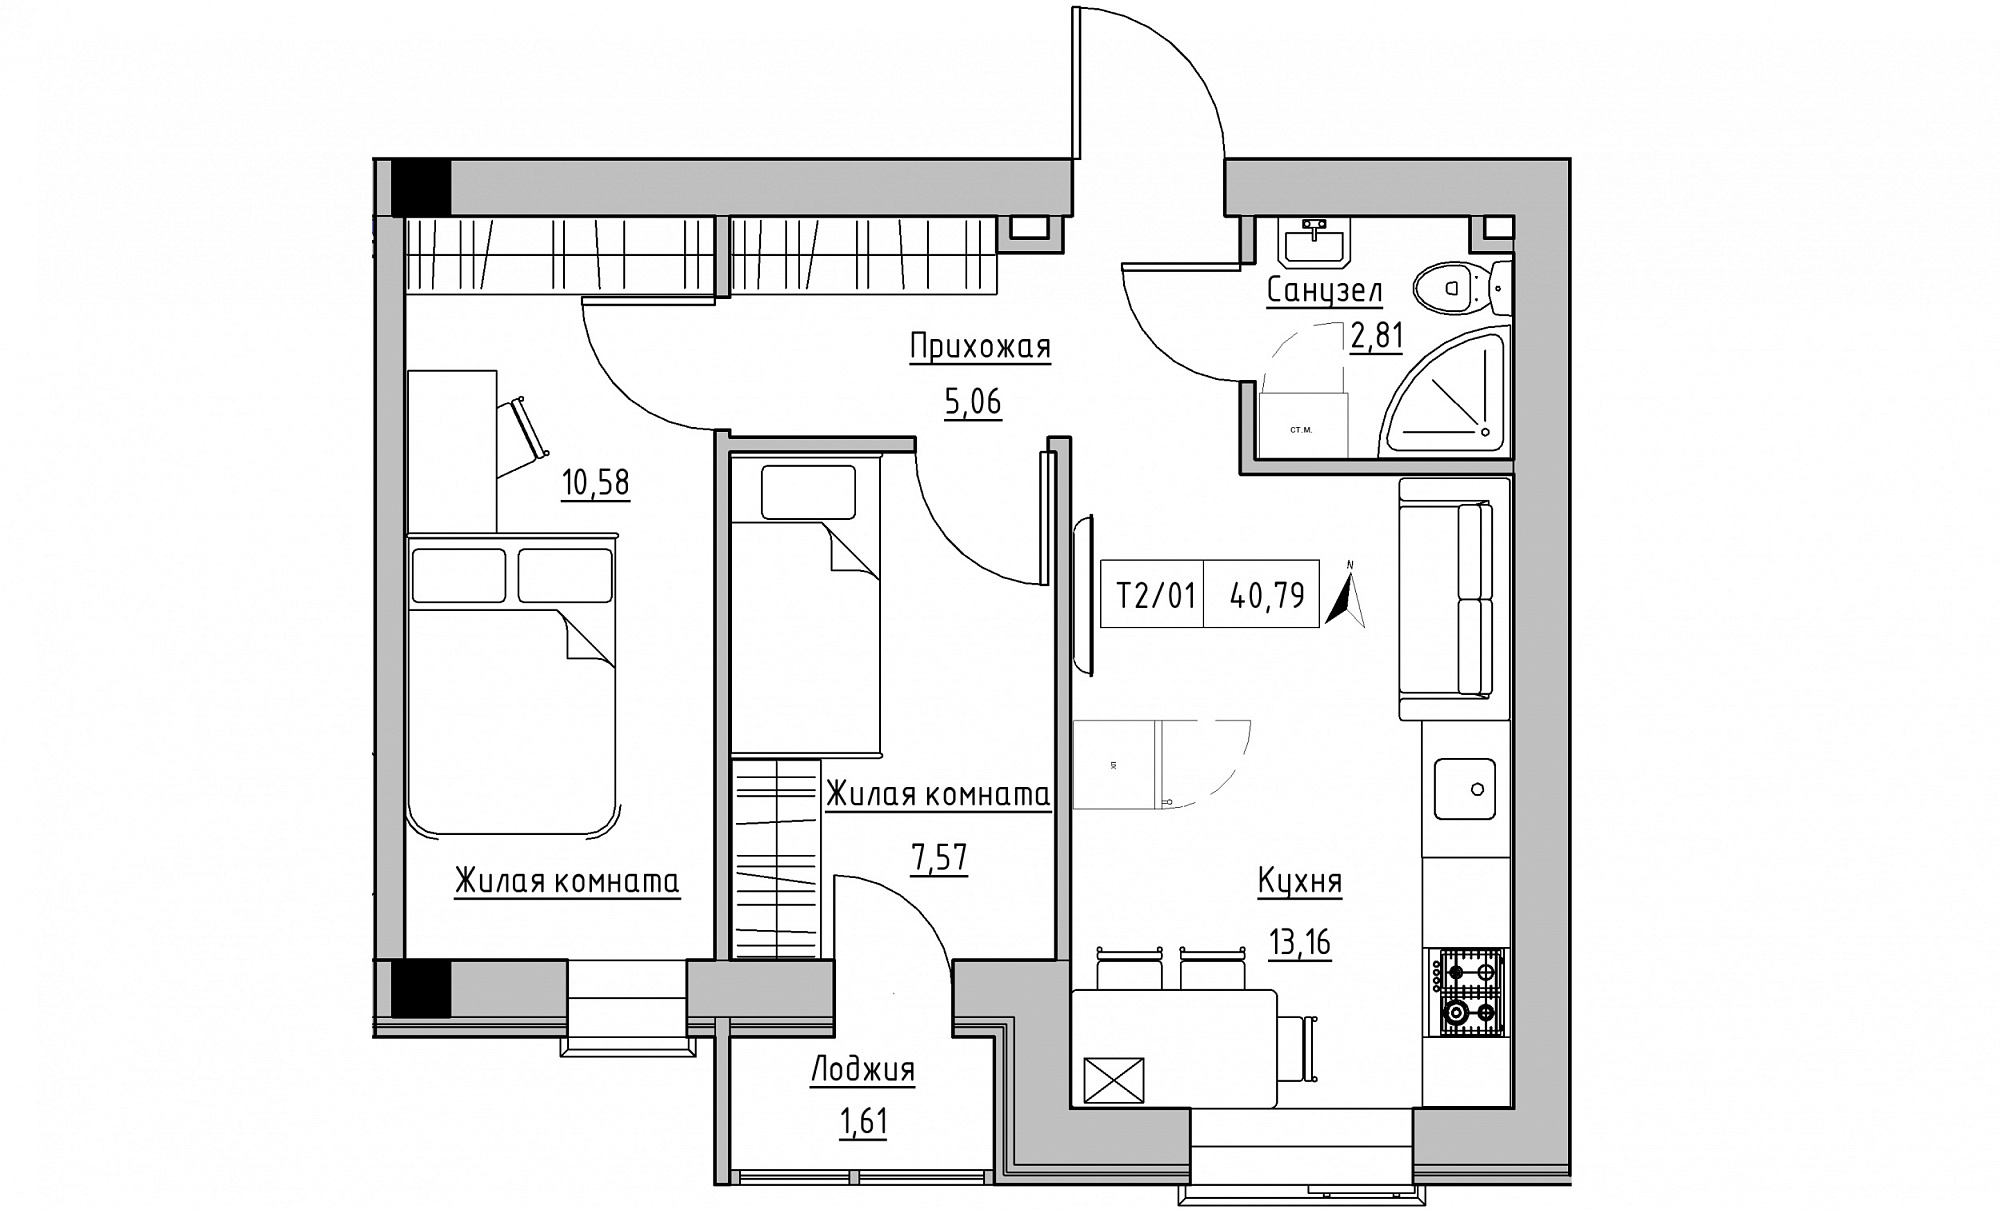 Planning 2-rm flats area 40.79m2, KS-015-01/0011.